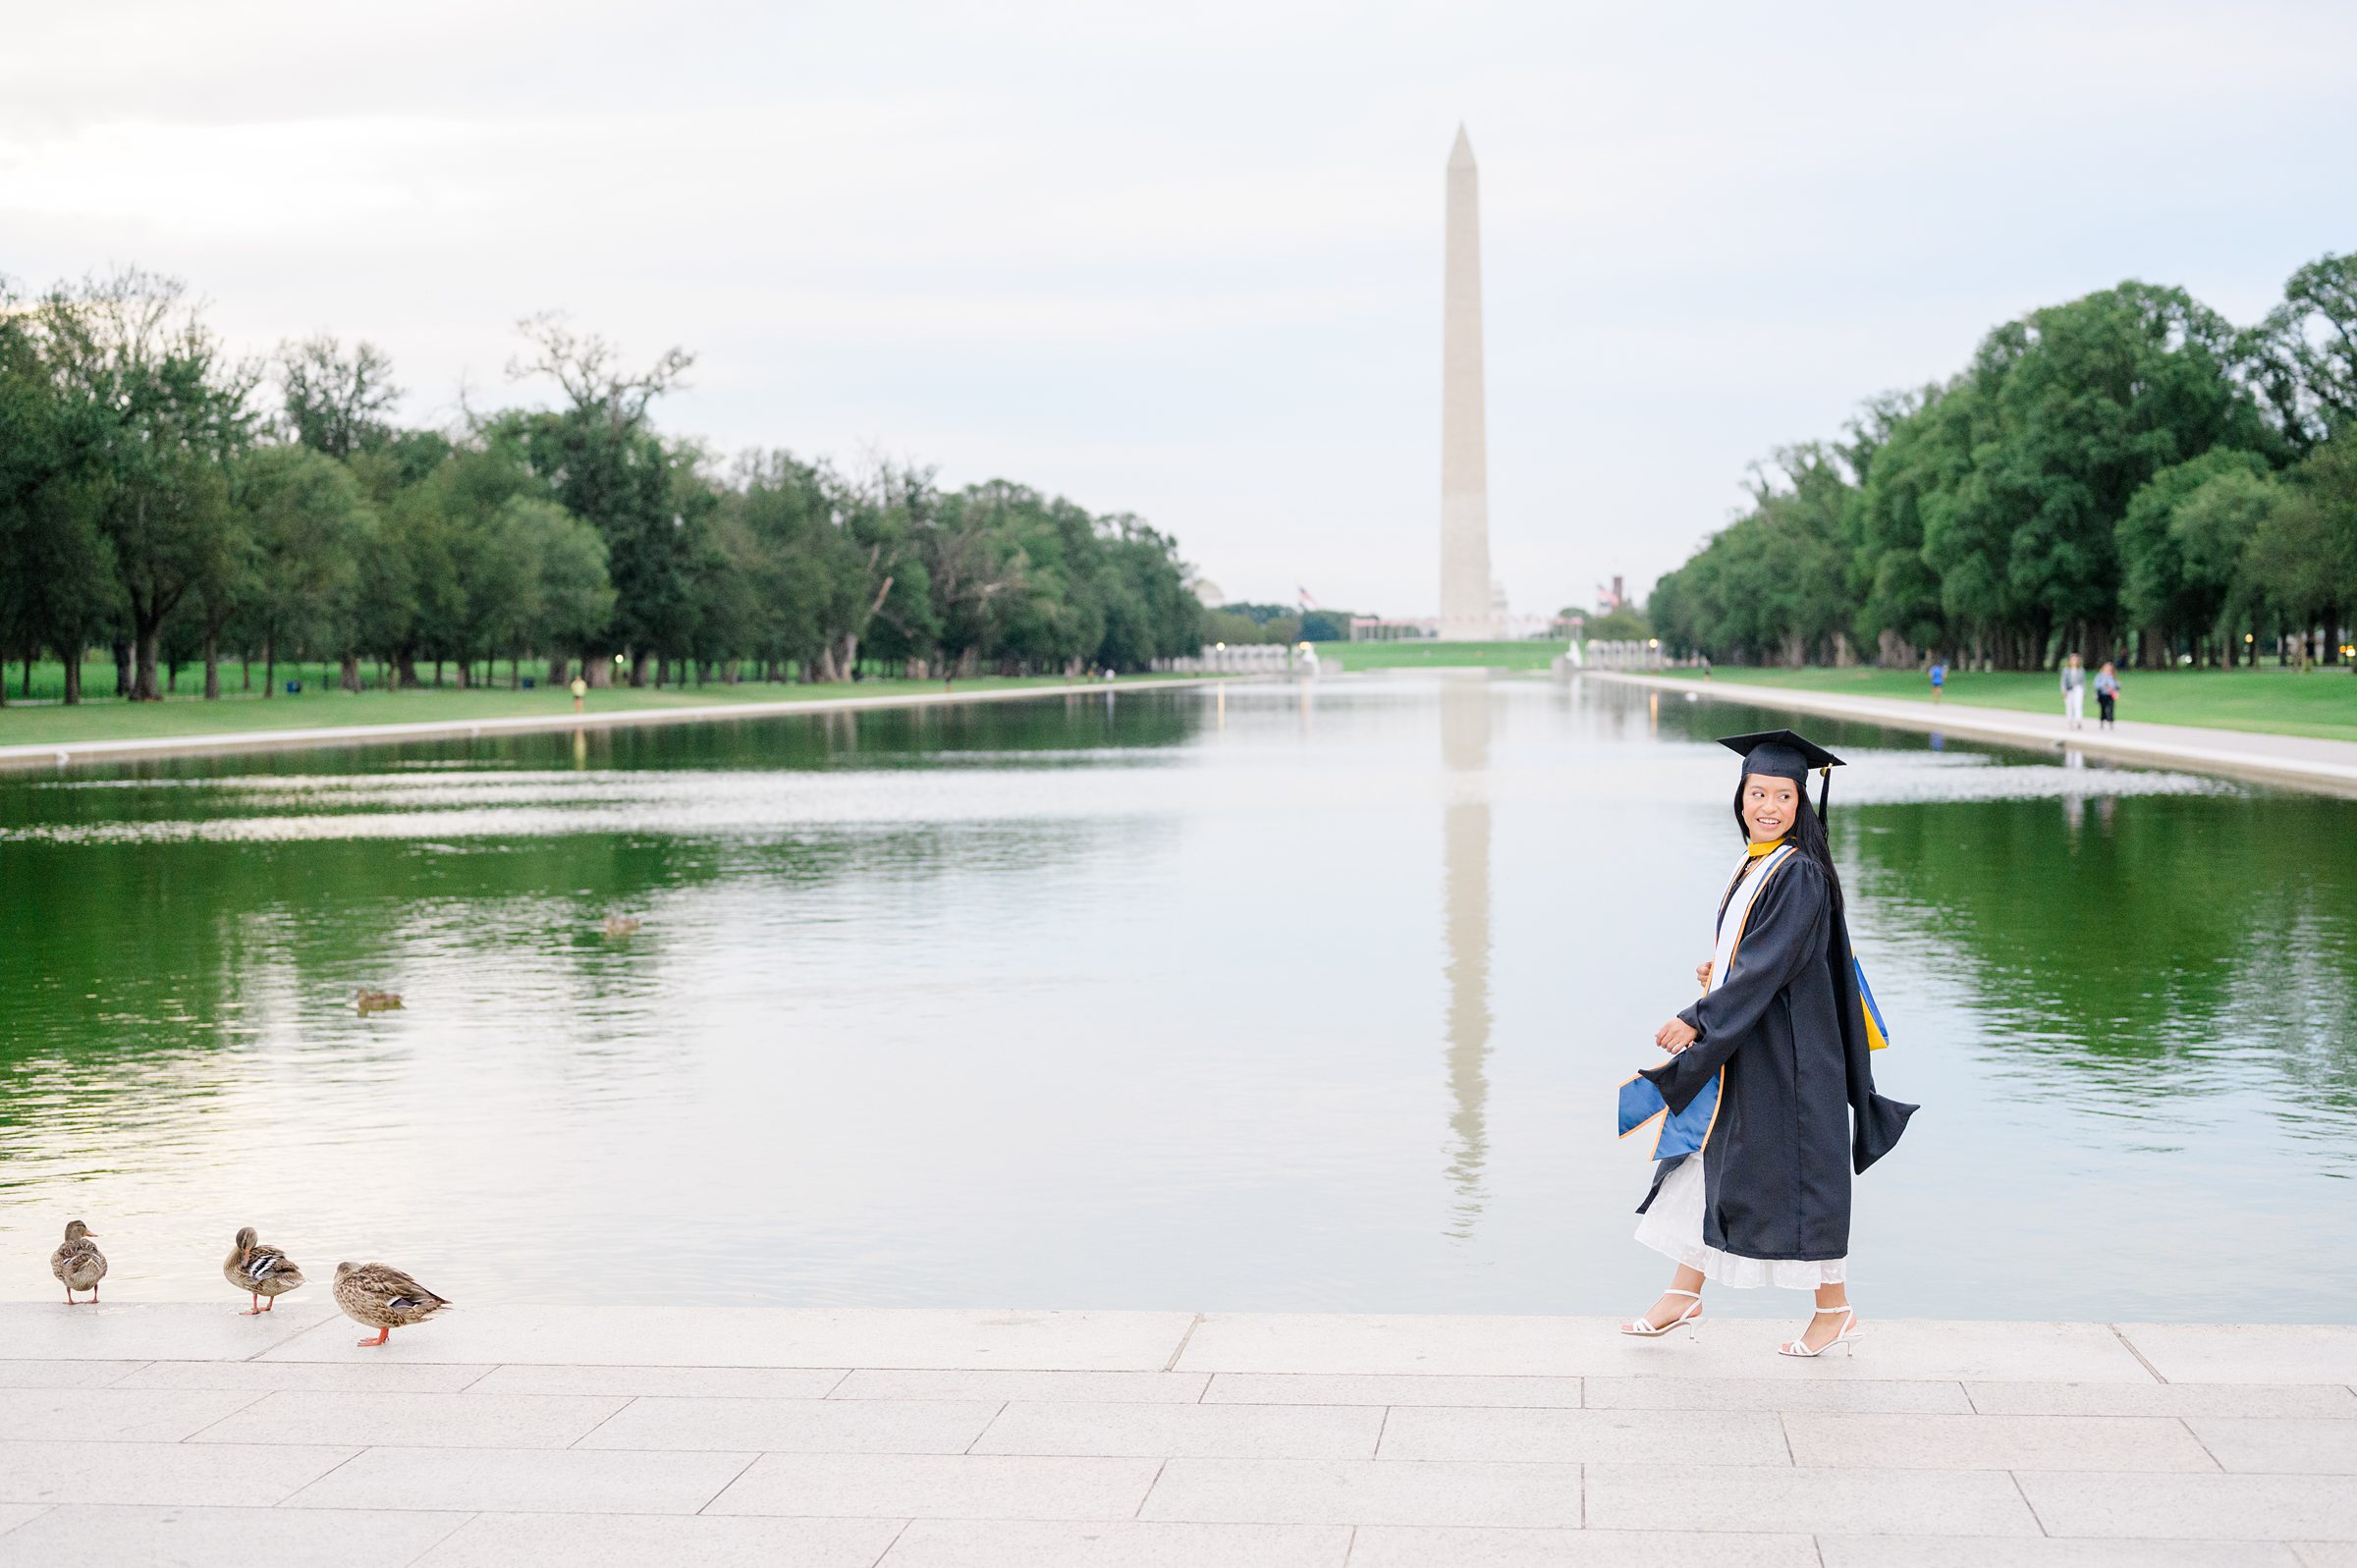 College graduation portrait session at the DC War Memorial in Washington, D.C. photographed by Baltimore Grad Photographer Cait Kramer.